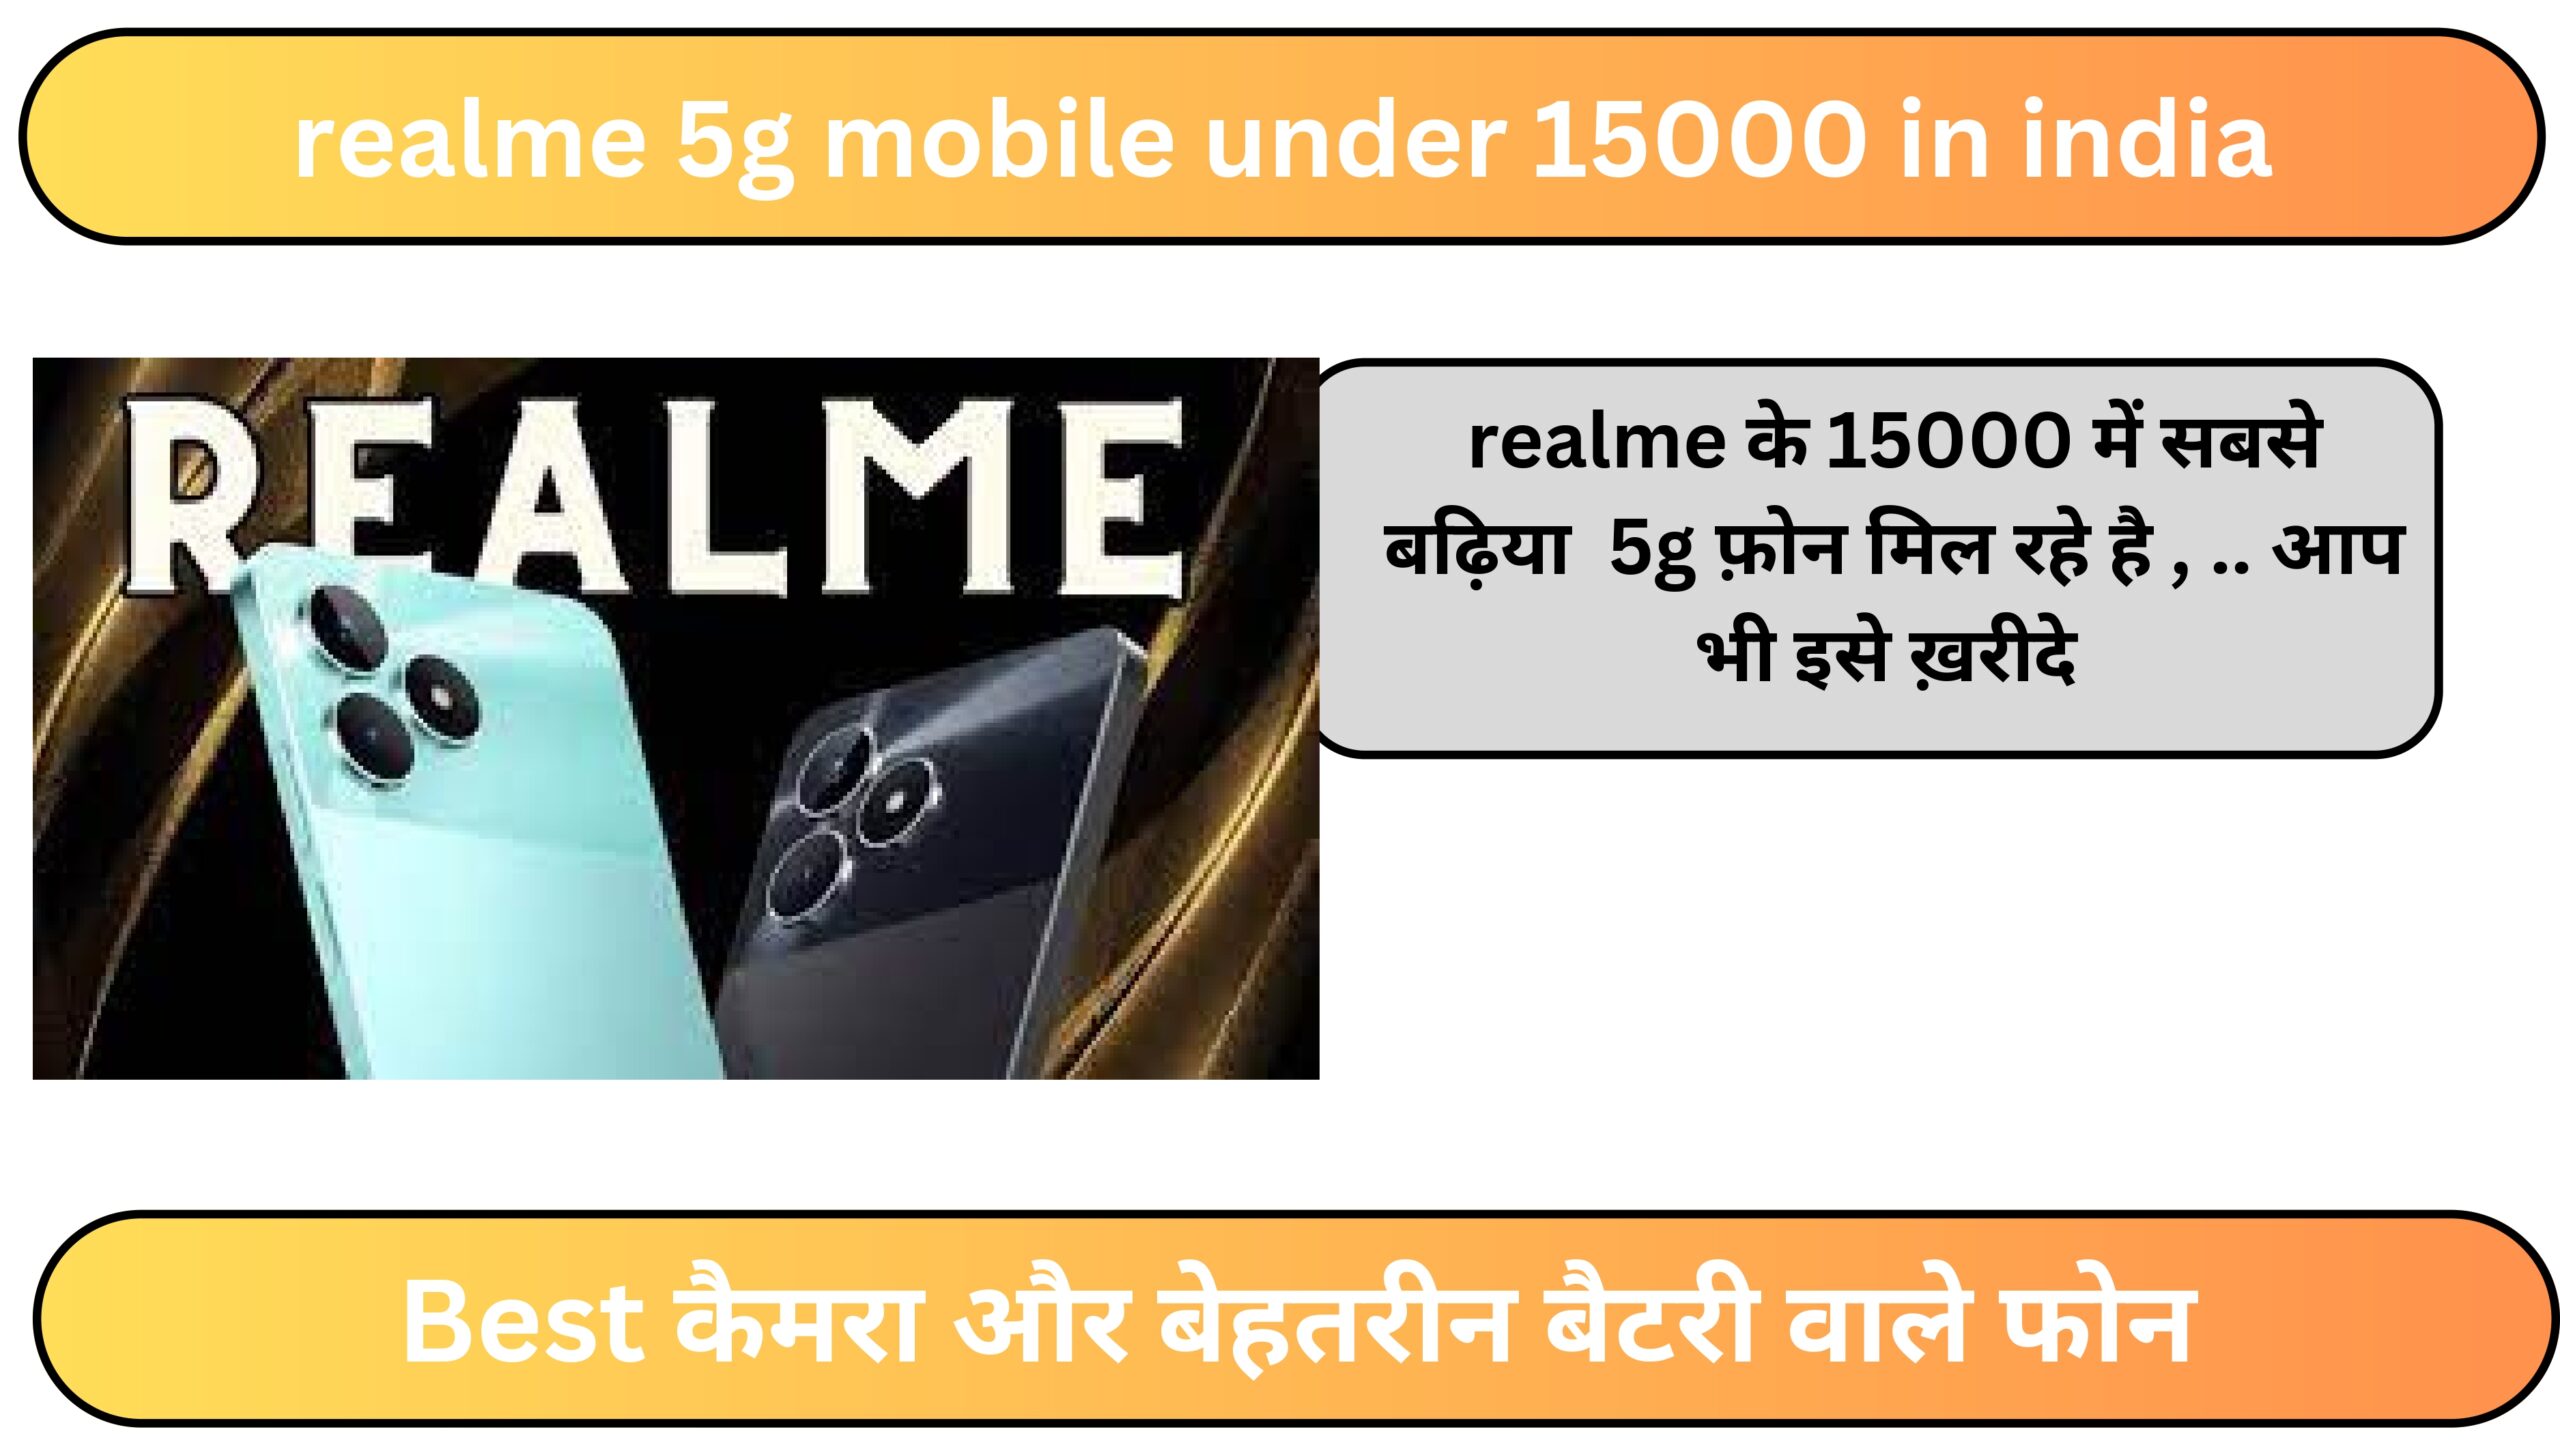 realme 5g mobile under 15000 in india